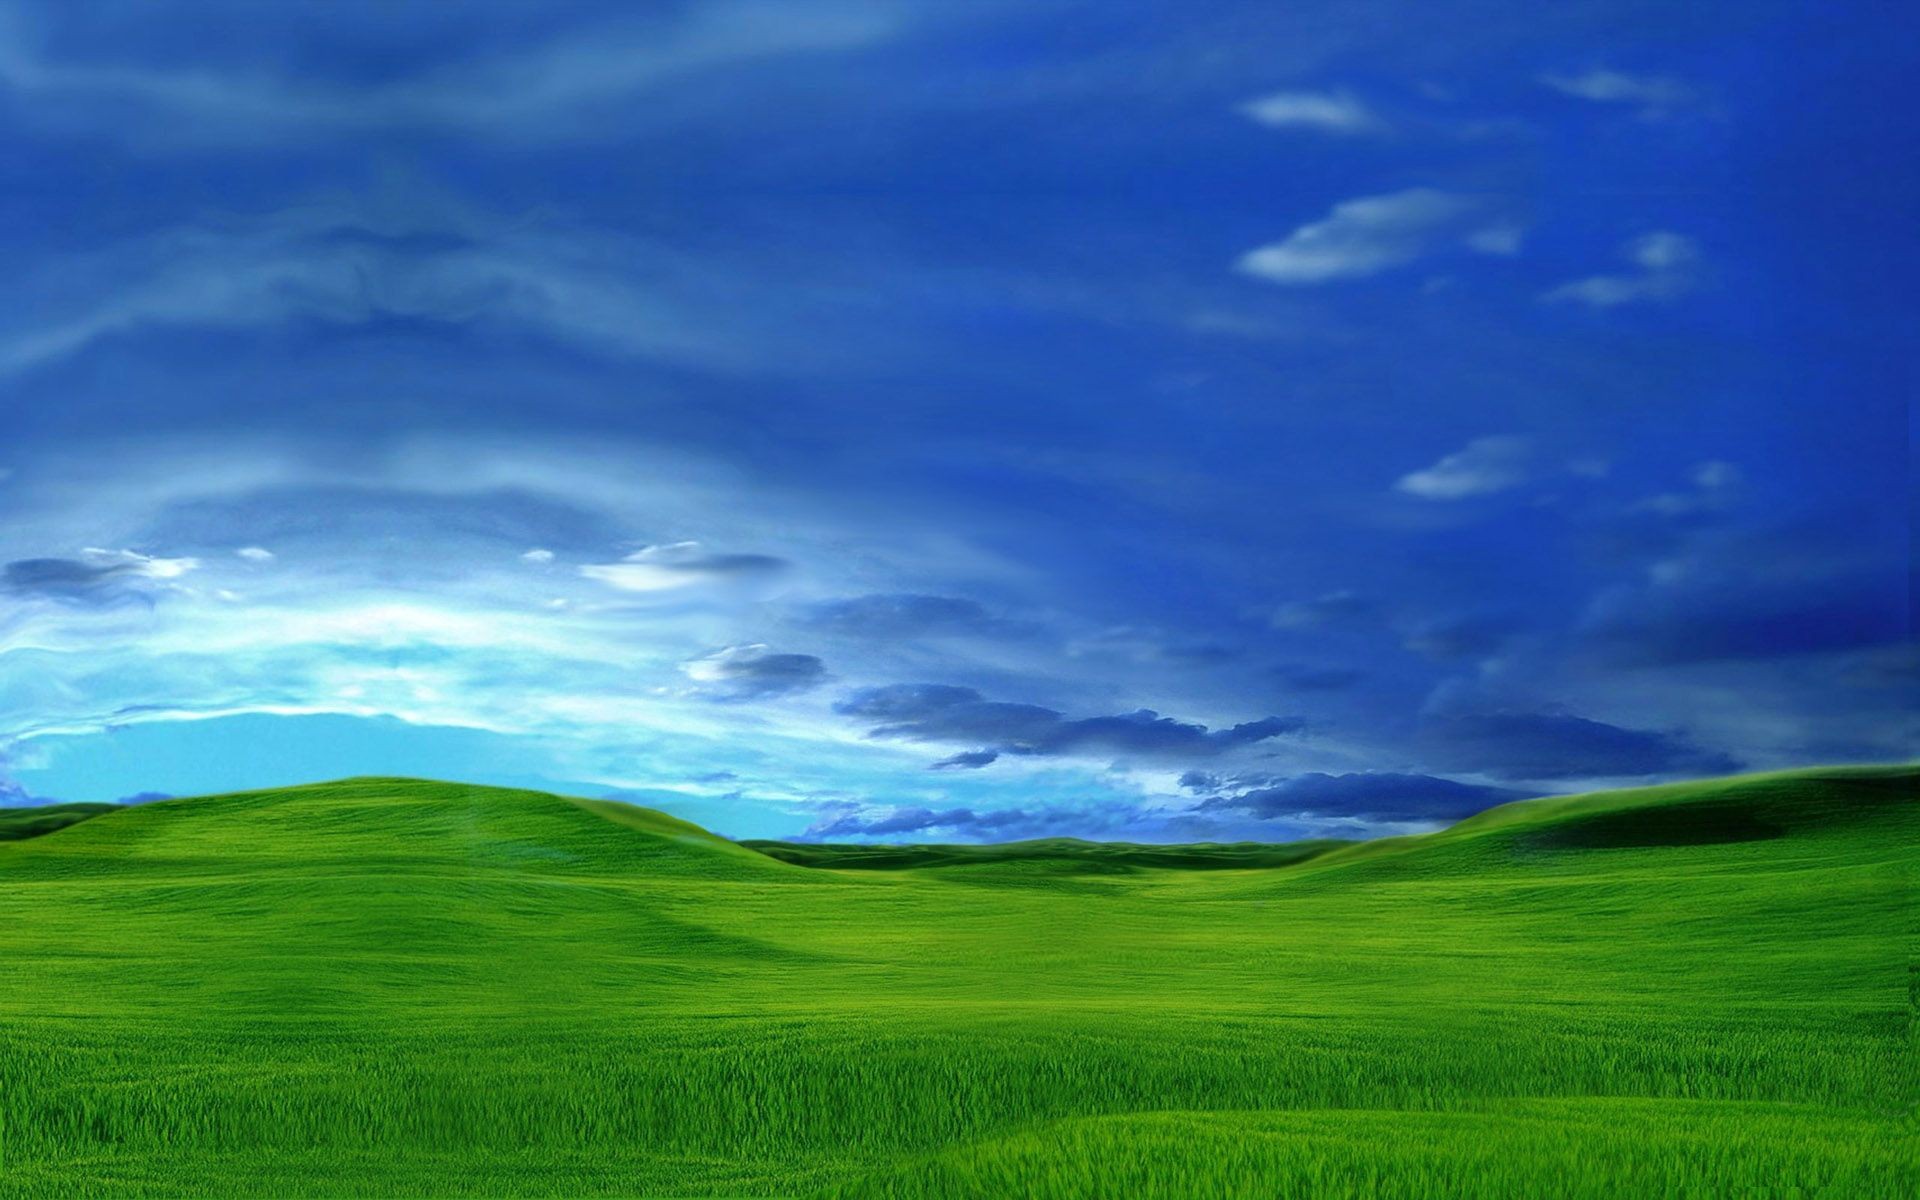 Windows 98 wallpaper ·① Download free amazing HD ...